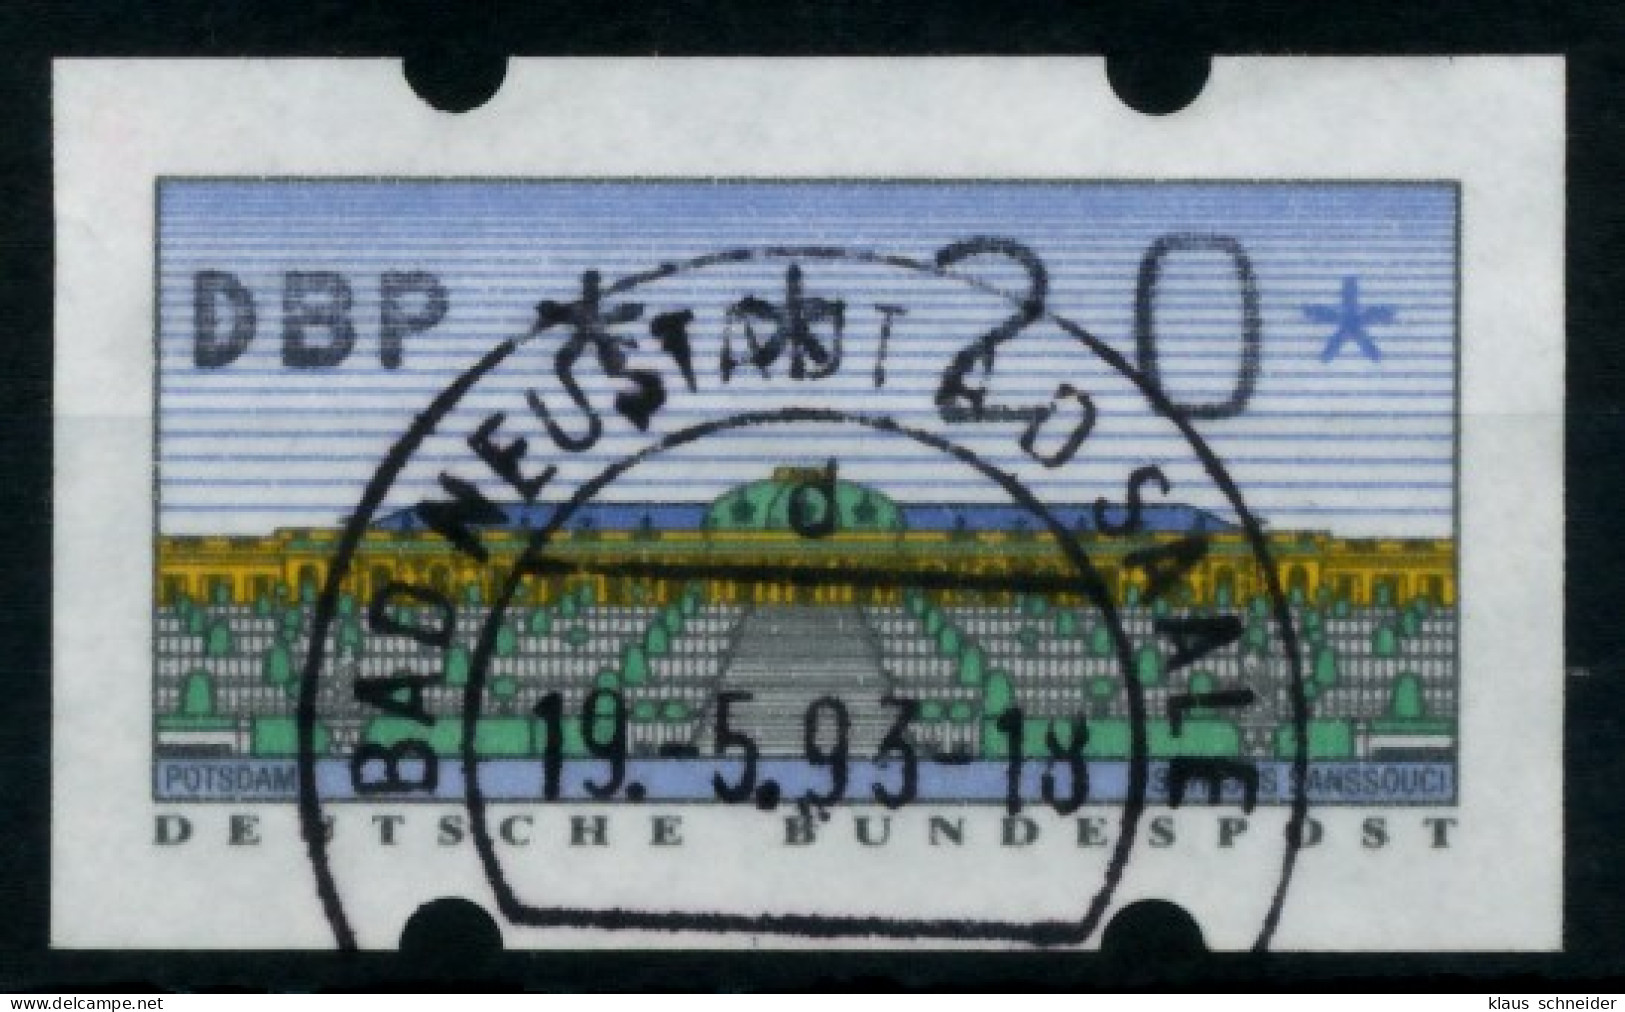 BRD ATM 1993 Nr 2-1.2-0020 Gestempelt X75C39A - Automaatzegels [ATM]